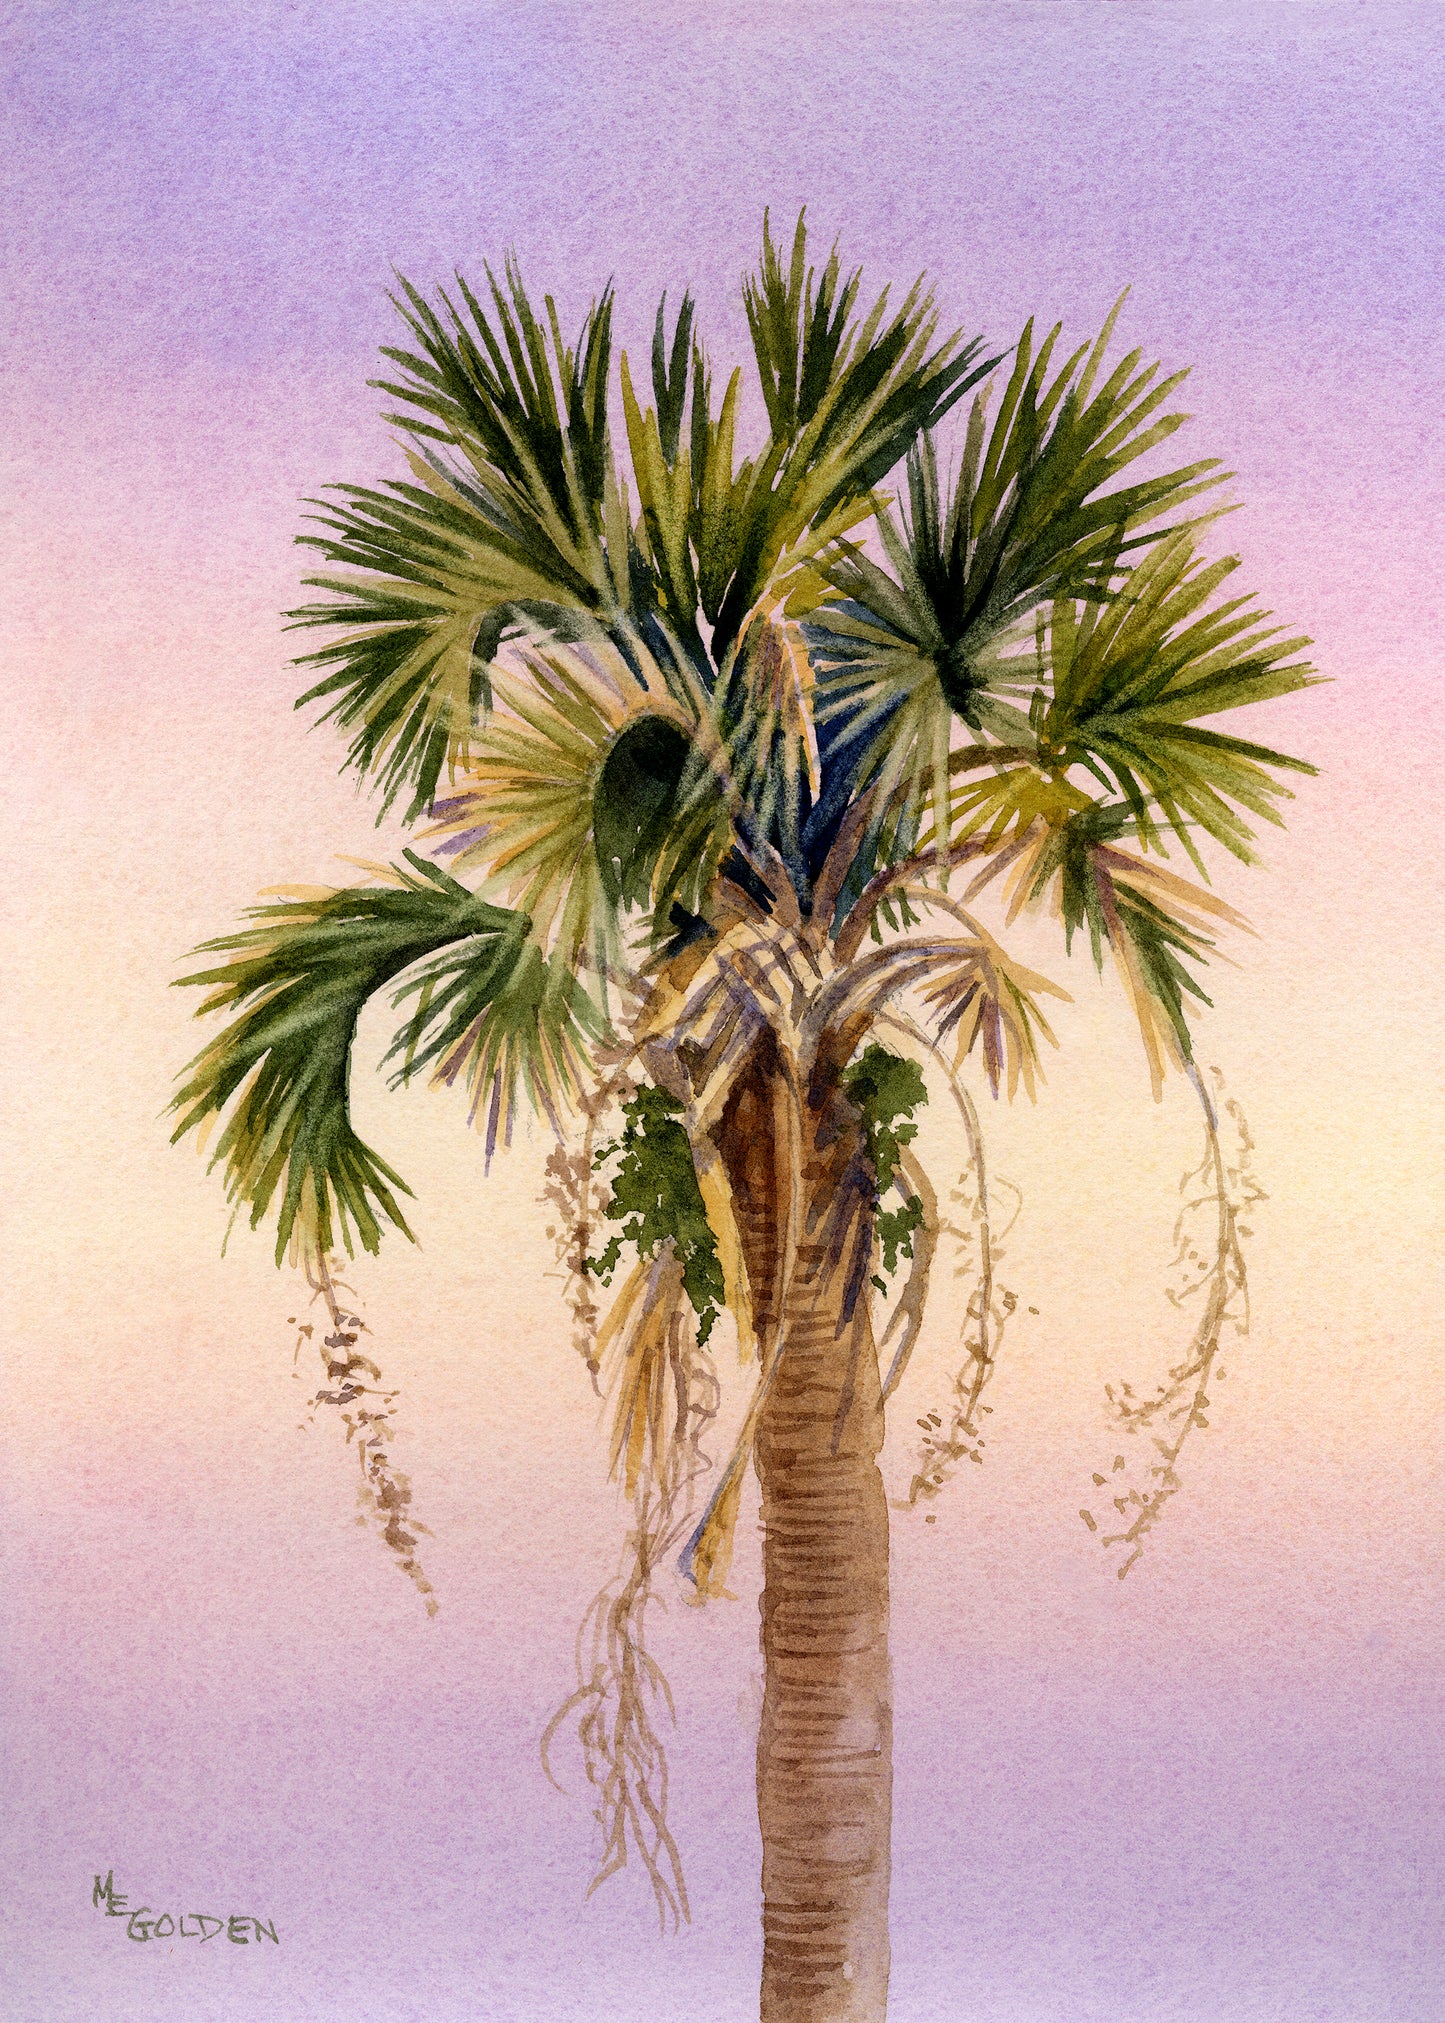 Sunset Palm fronds waving in the evening light Giclée Print